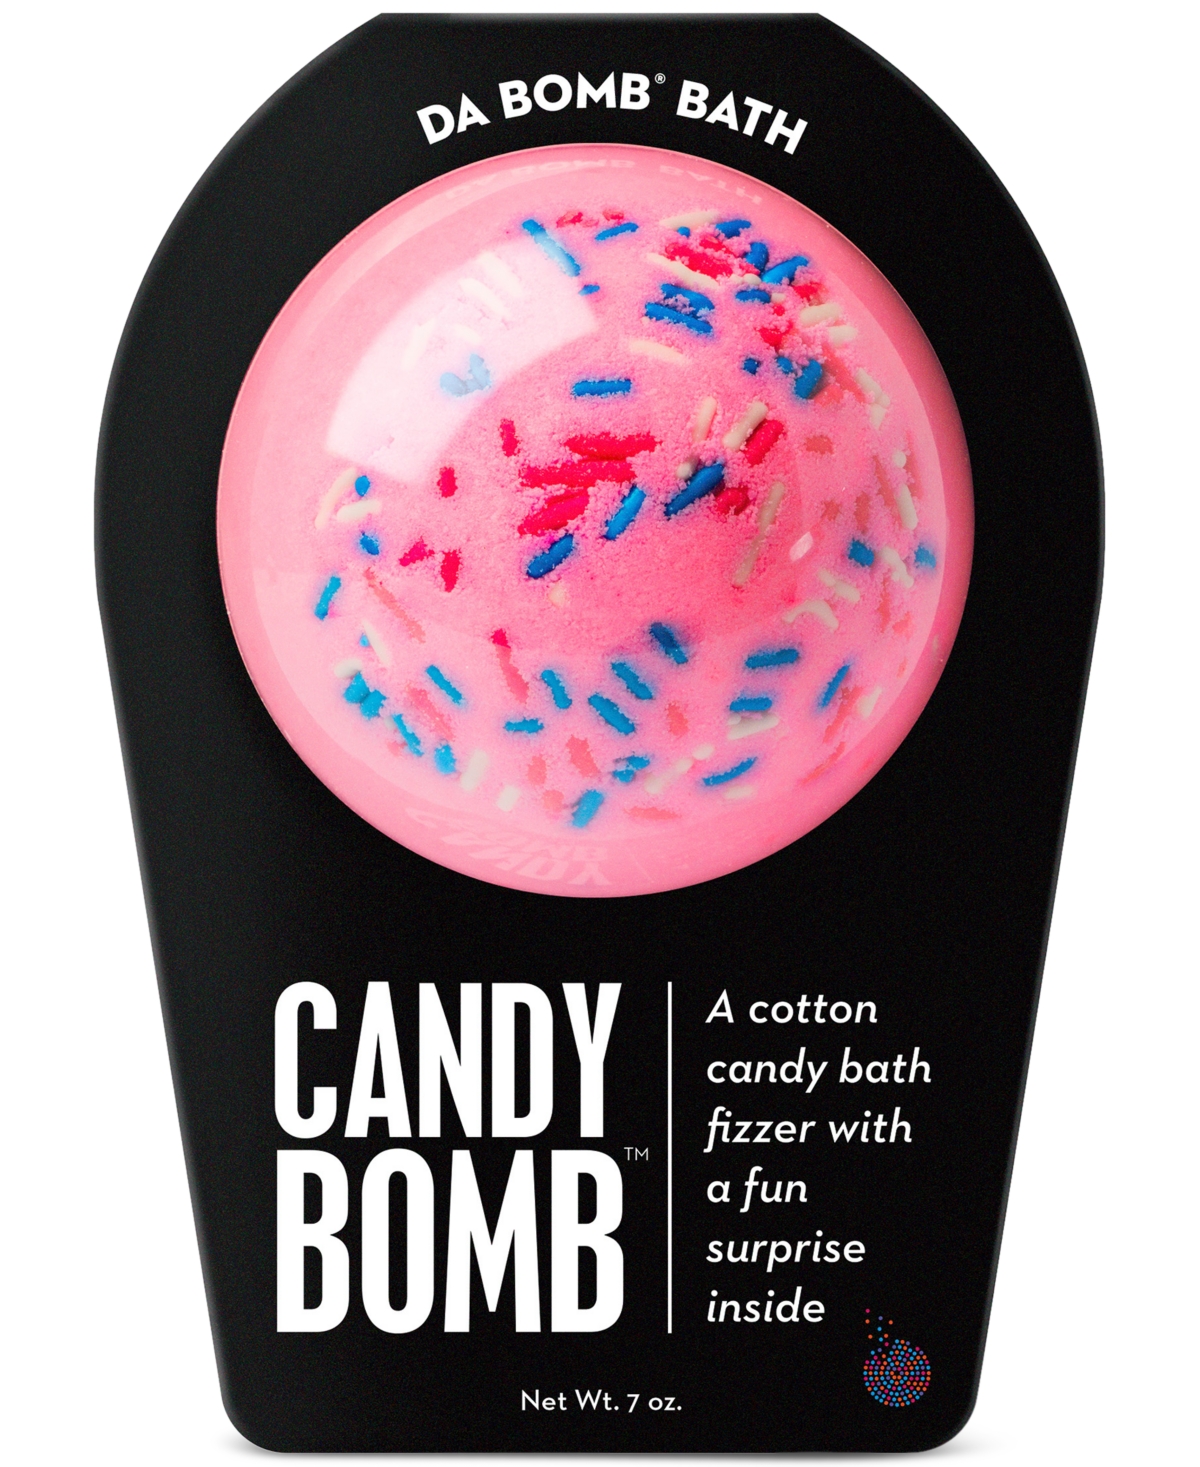 Candy Bath Bomb, 7 oz. - Candy Bomb